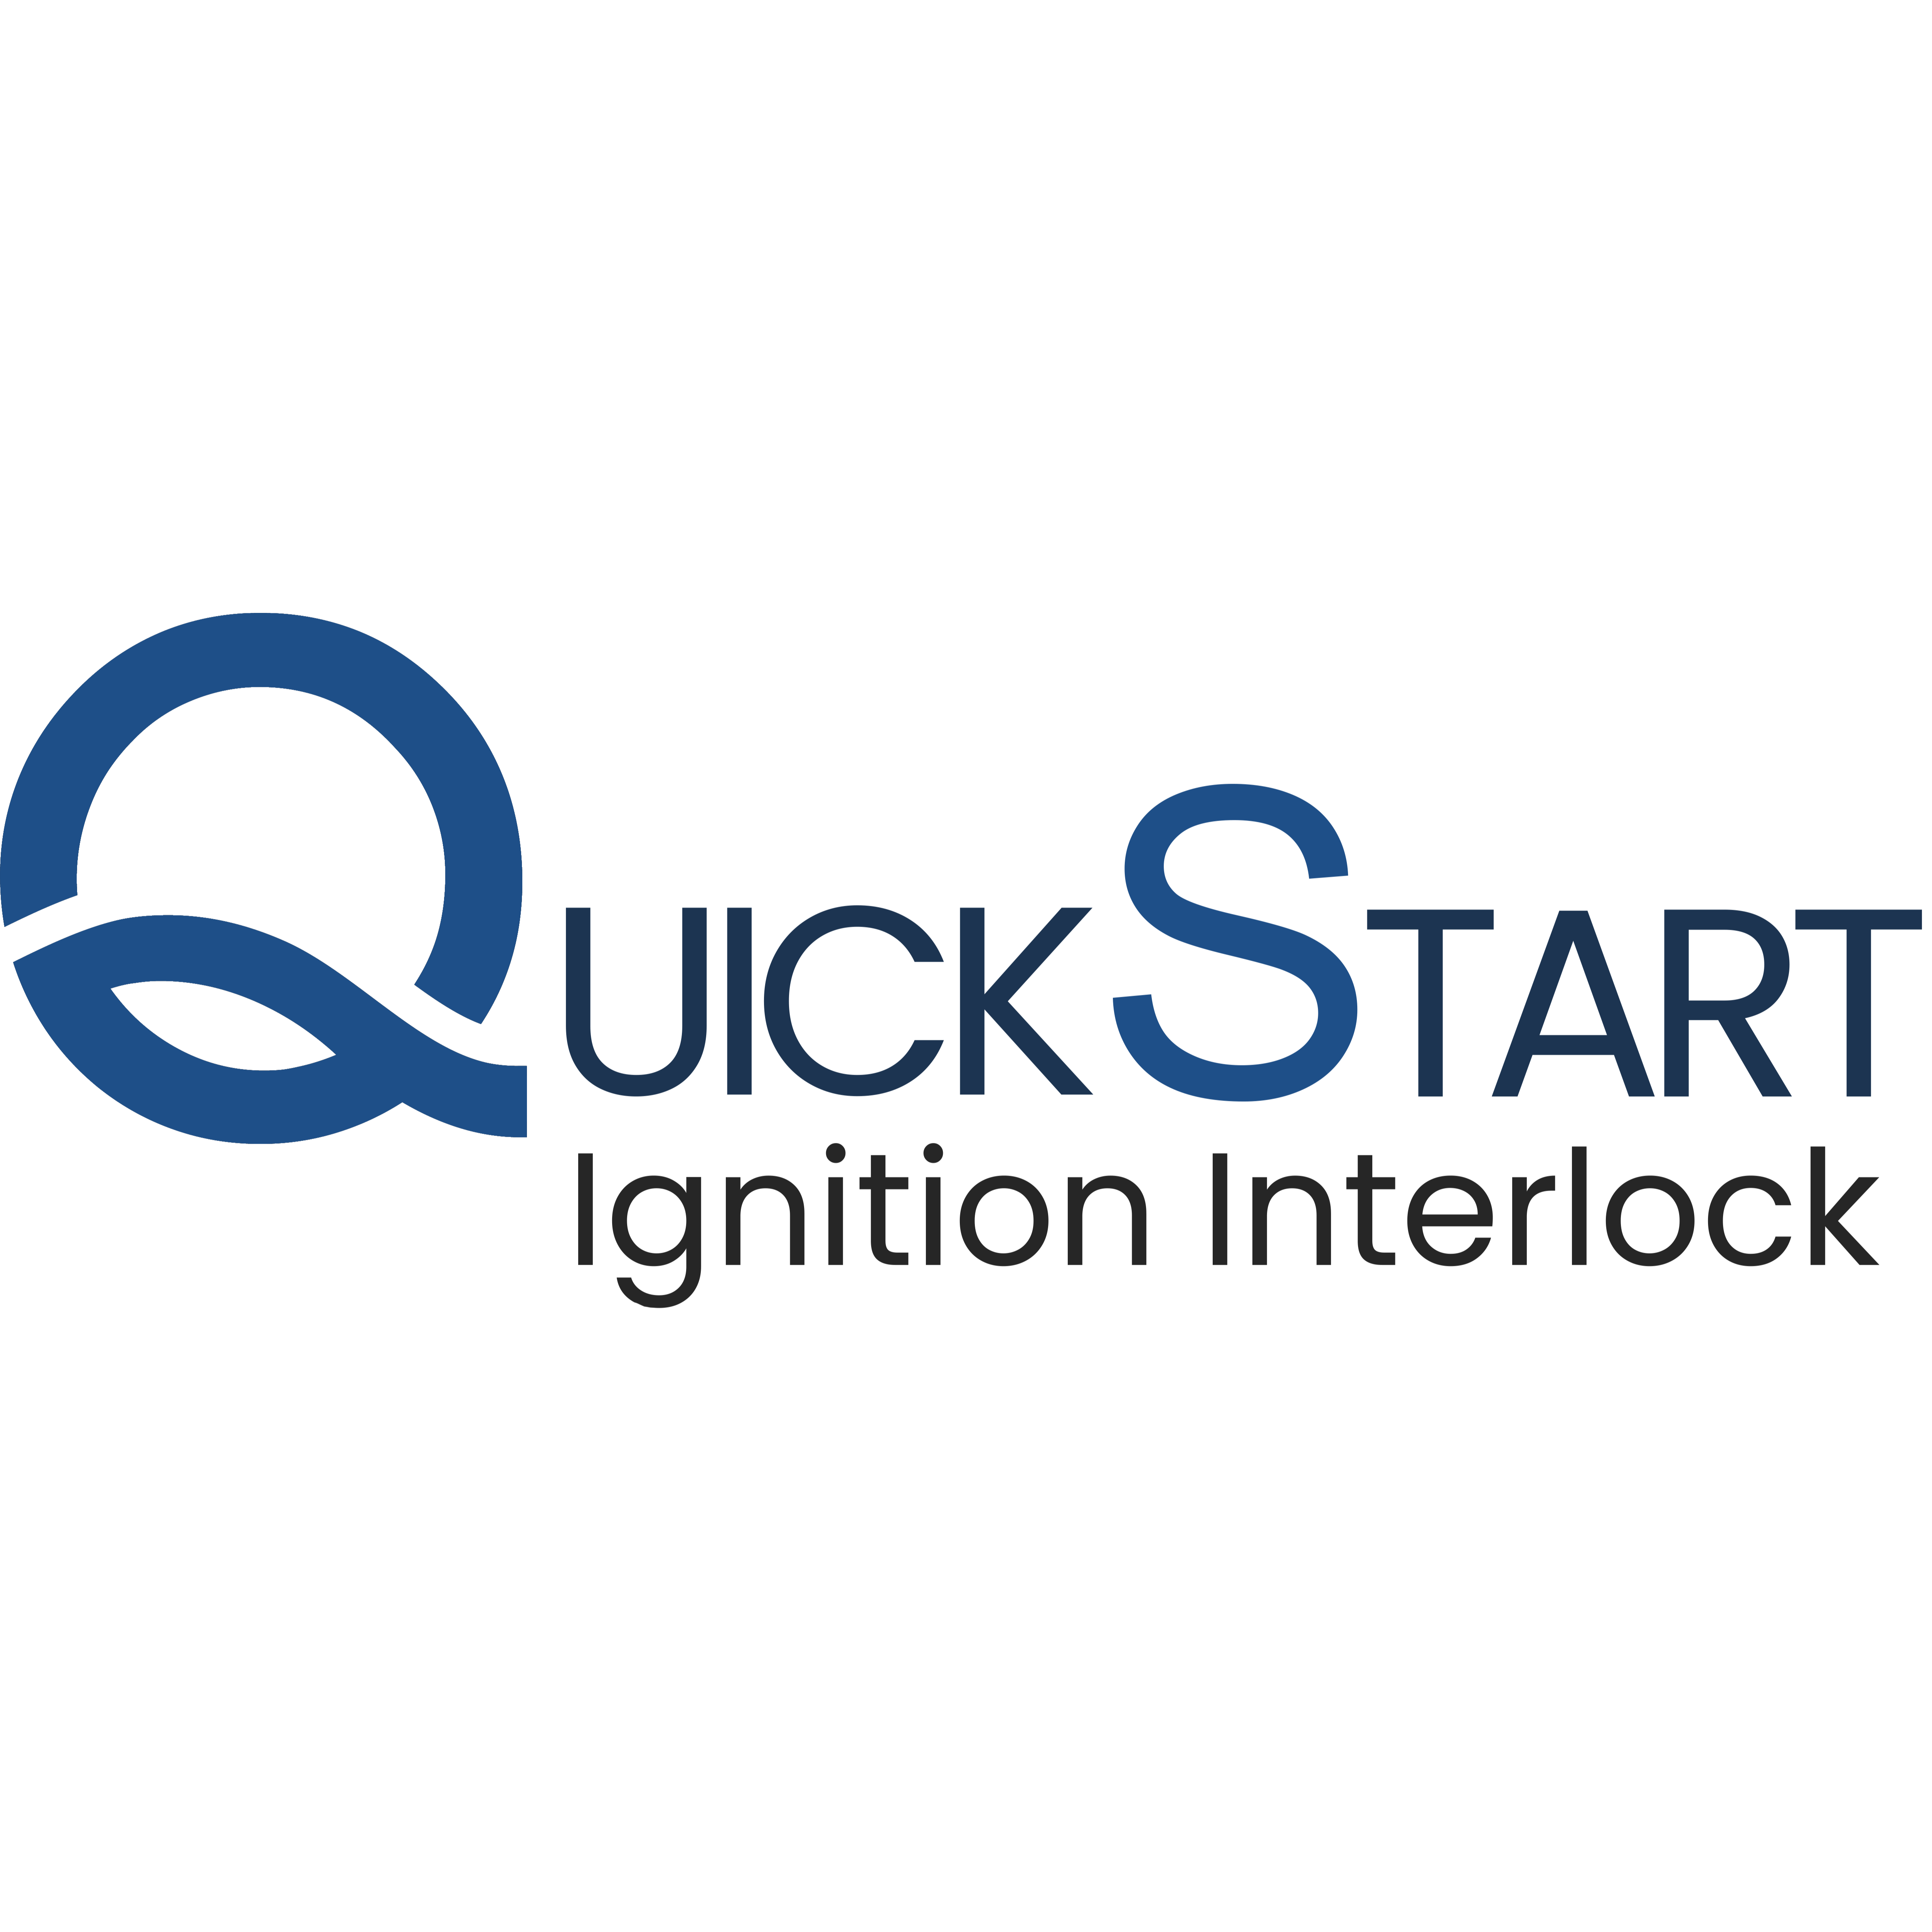 QuickStart Ignition Interlock - Tempe, AZ 85281 - (480)428-8725 | ShowMeLocal.com